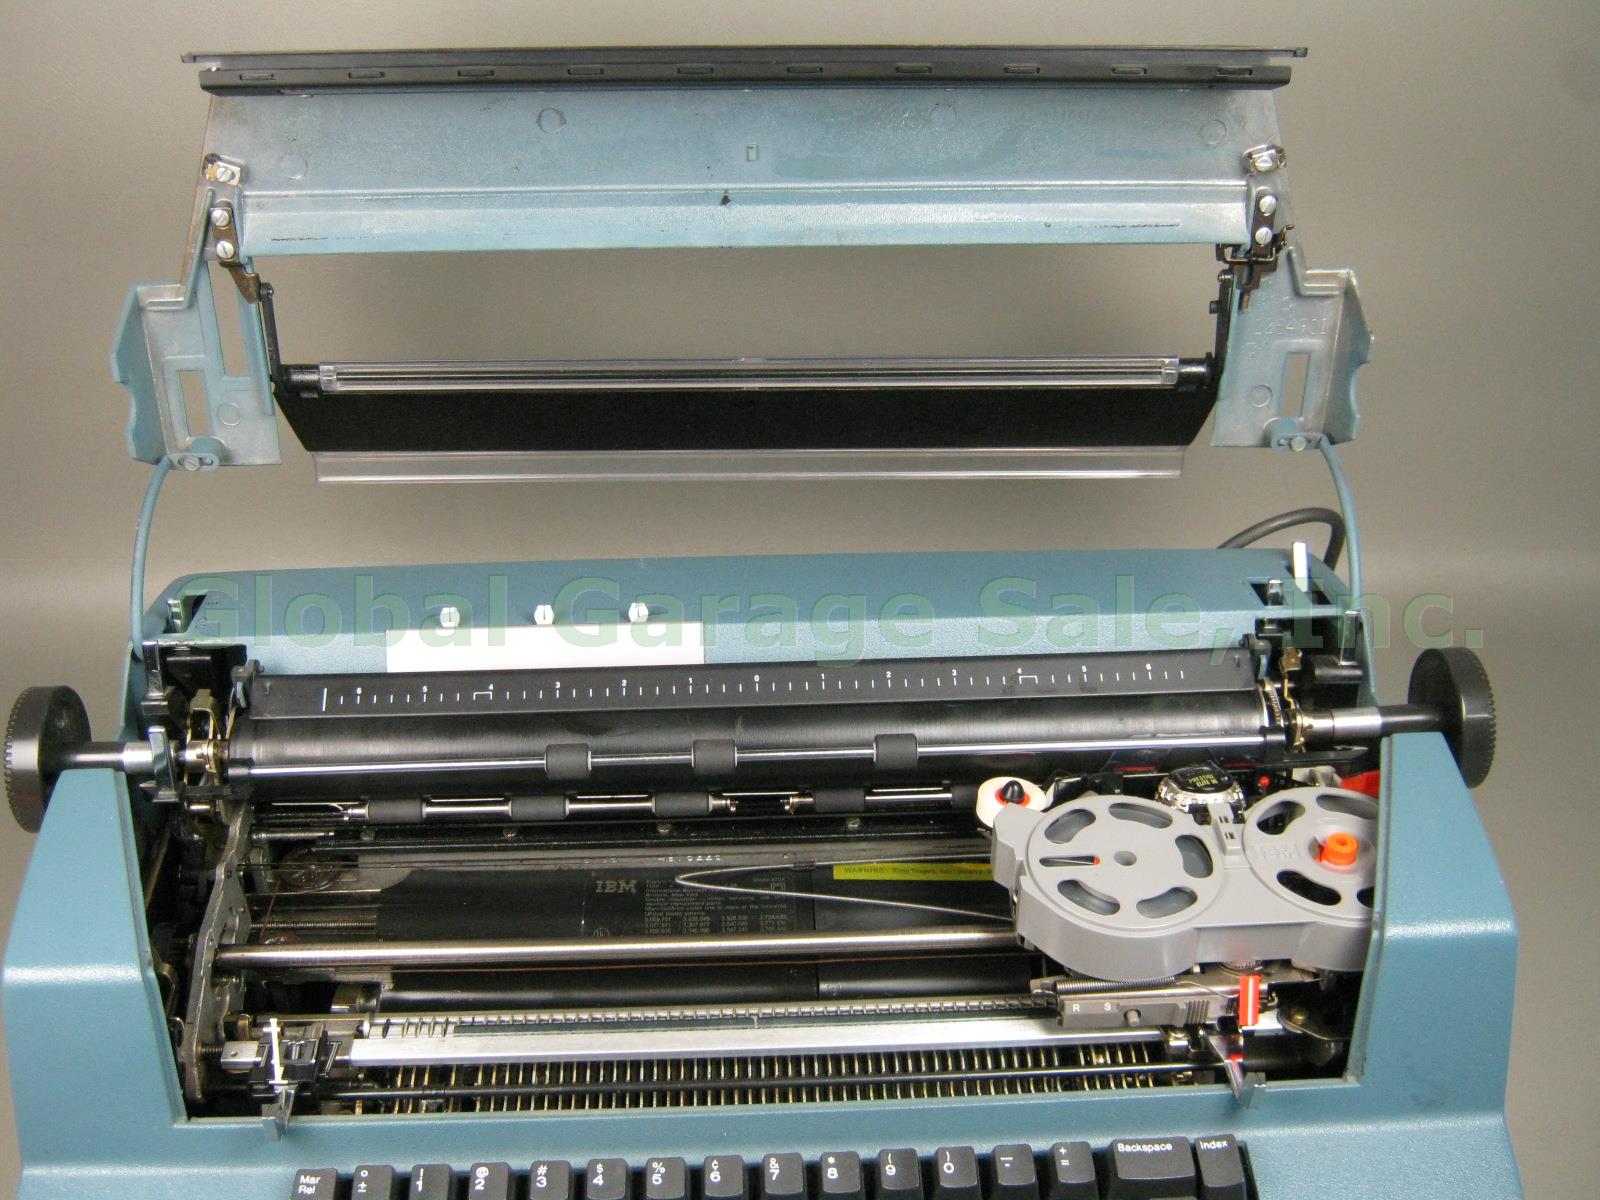 Blue IBM Correcting Selectric III Typewriter Professionally Refurbished 7/30/15 2